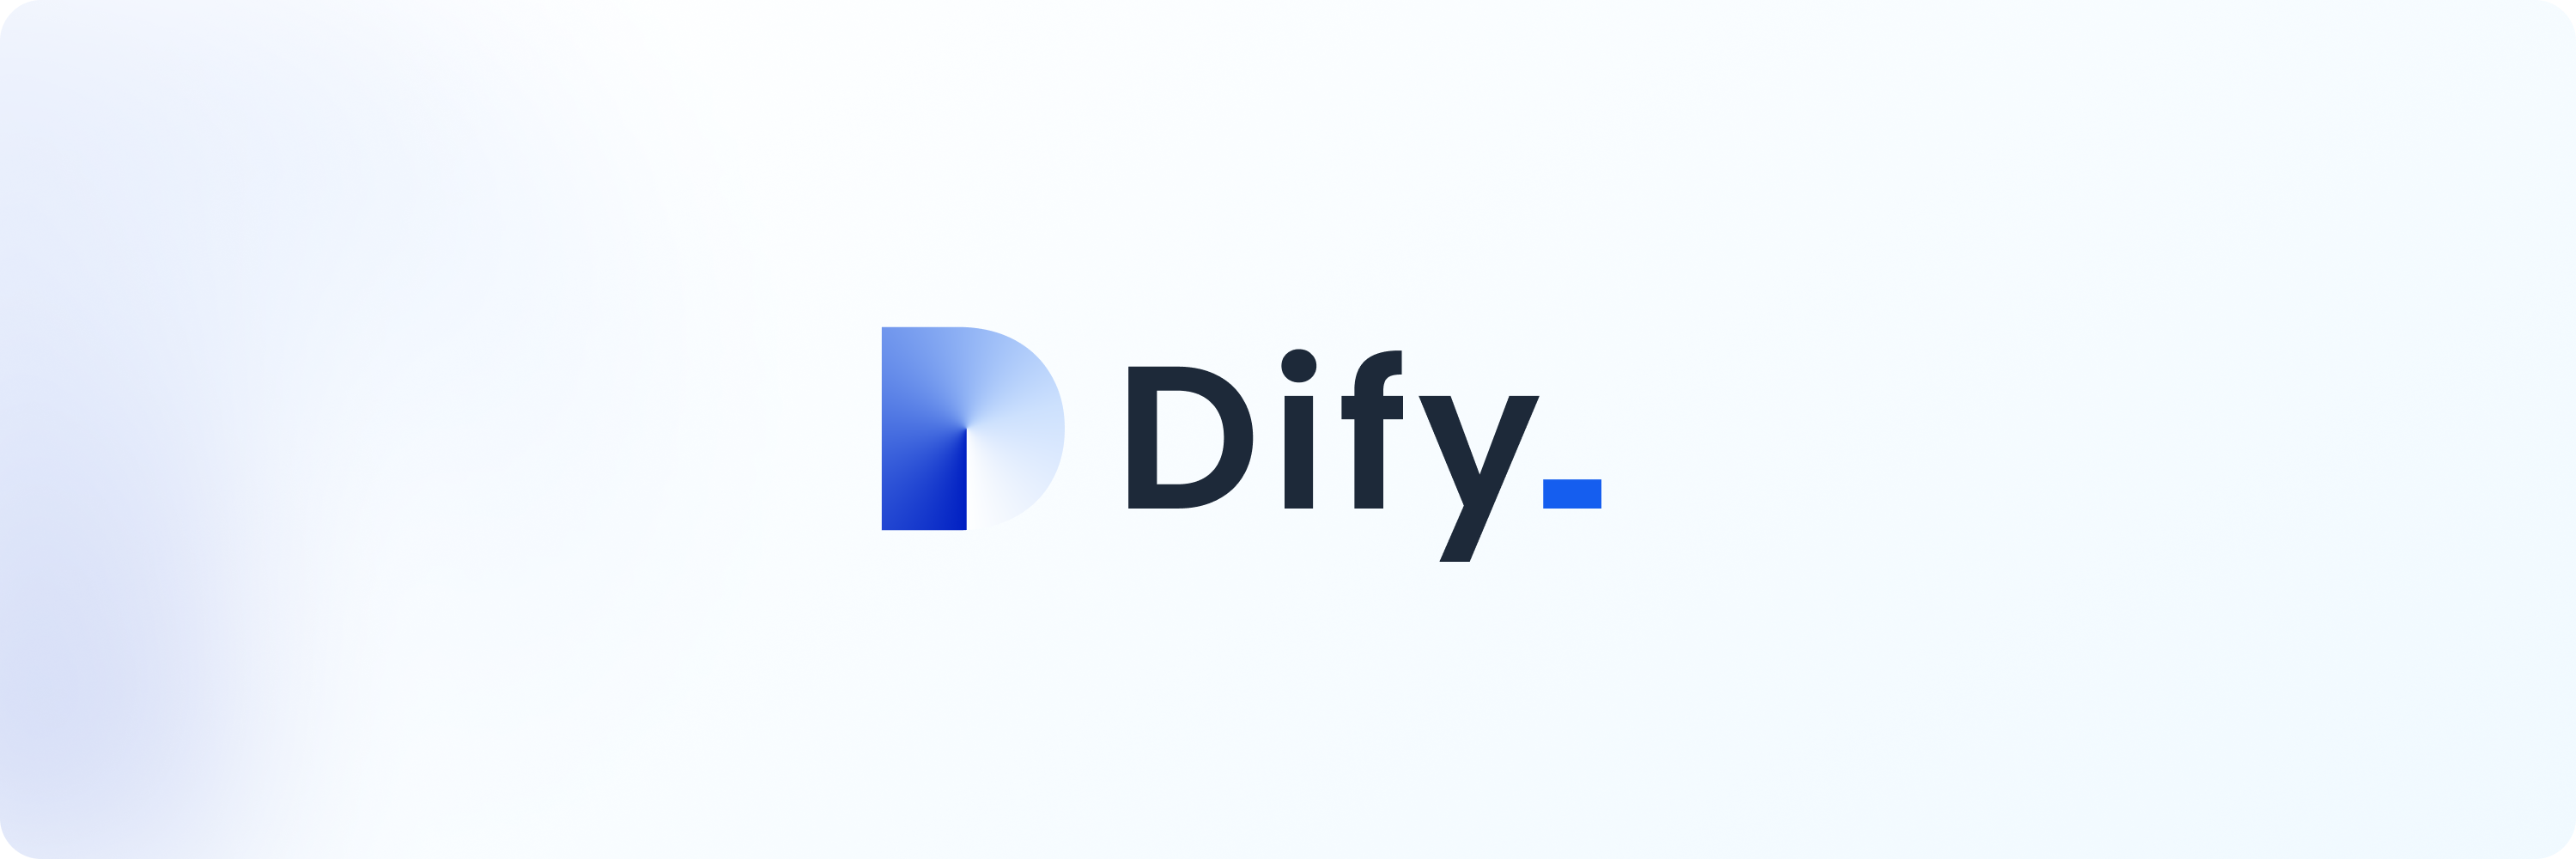 Dify 用户直面会:「Dify x 开源模型」的无限可能 & Baichuan 模型详解